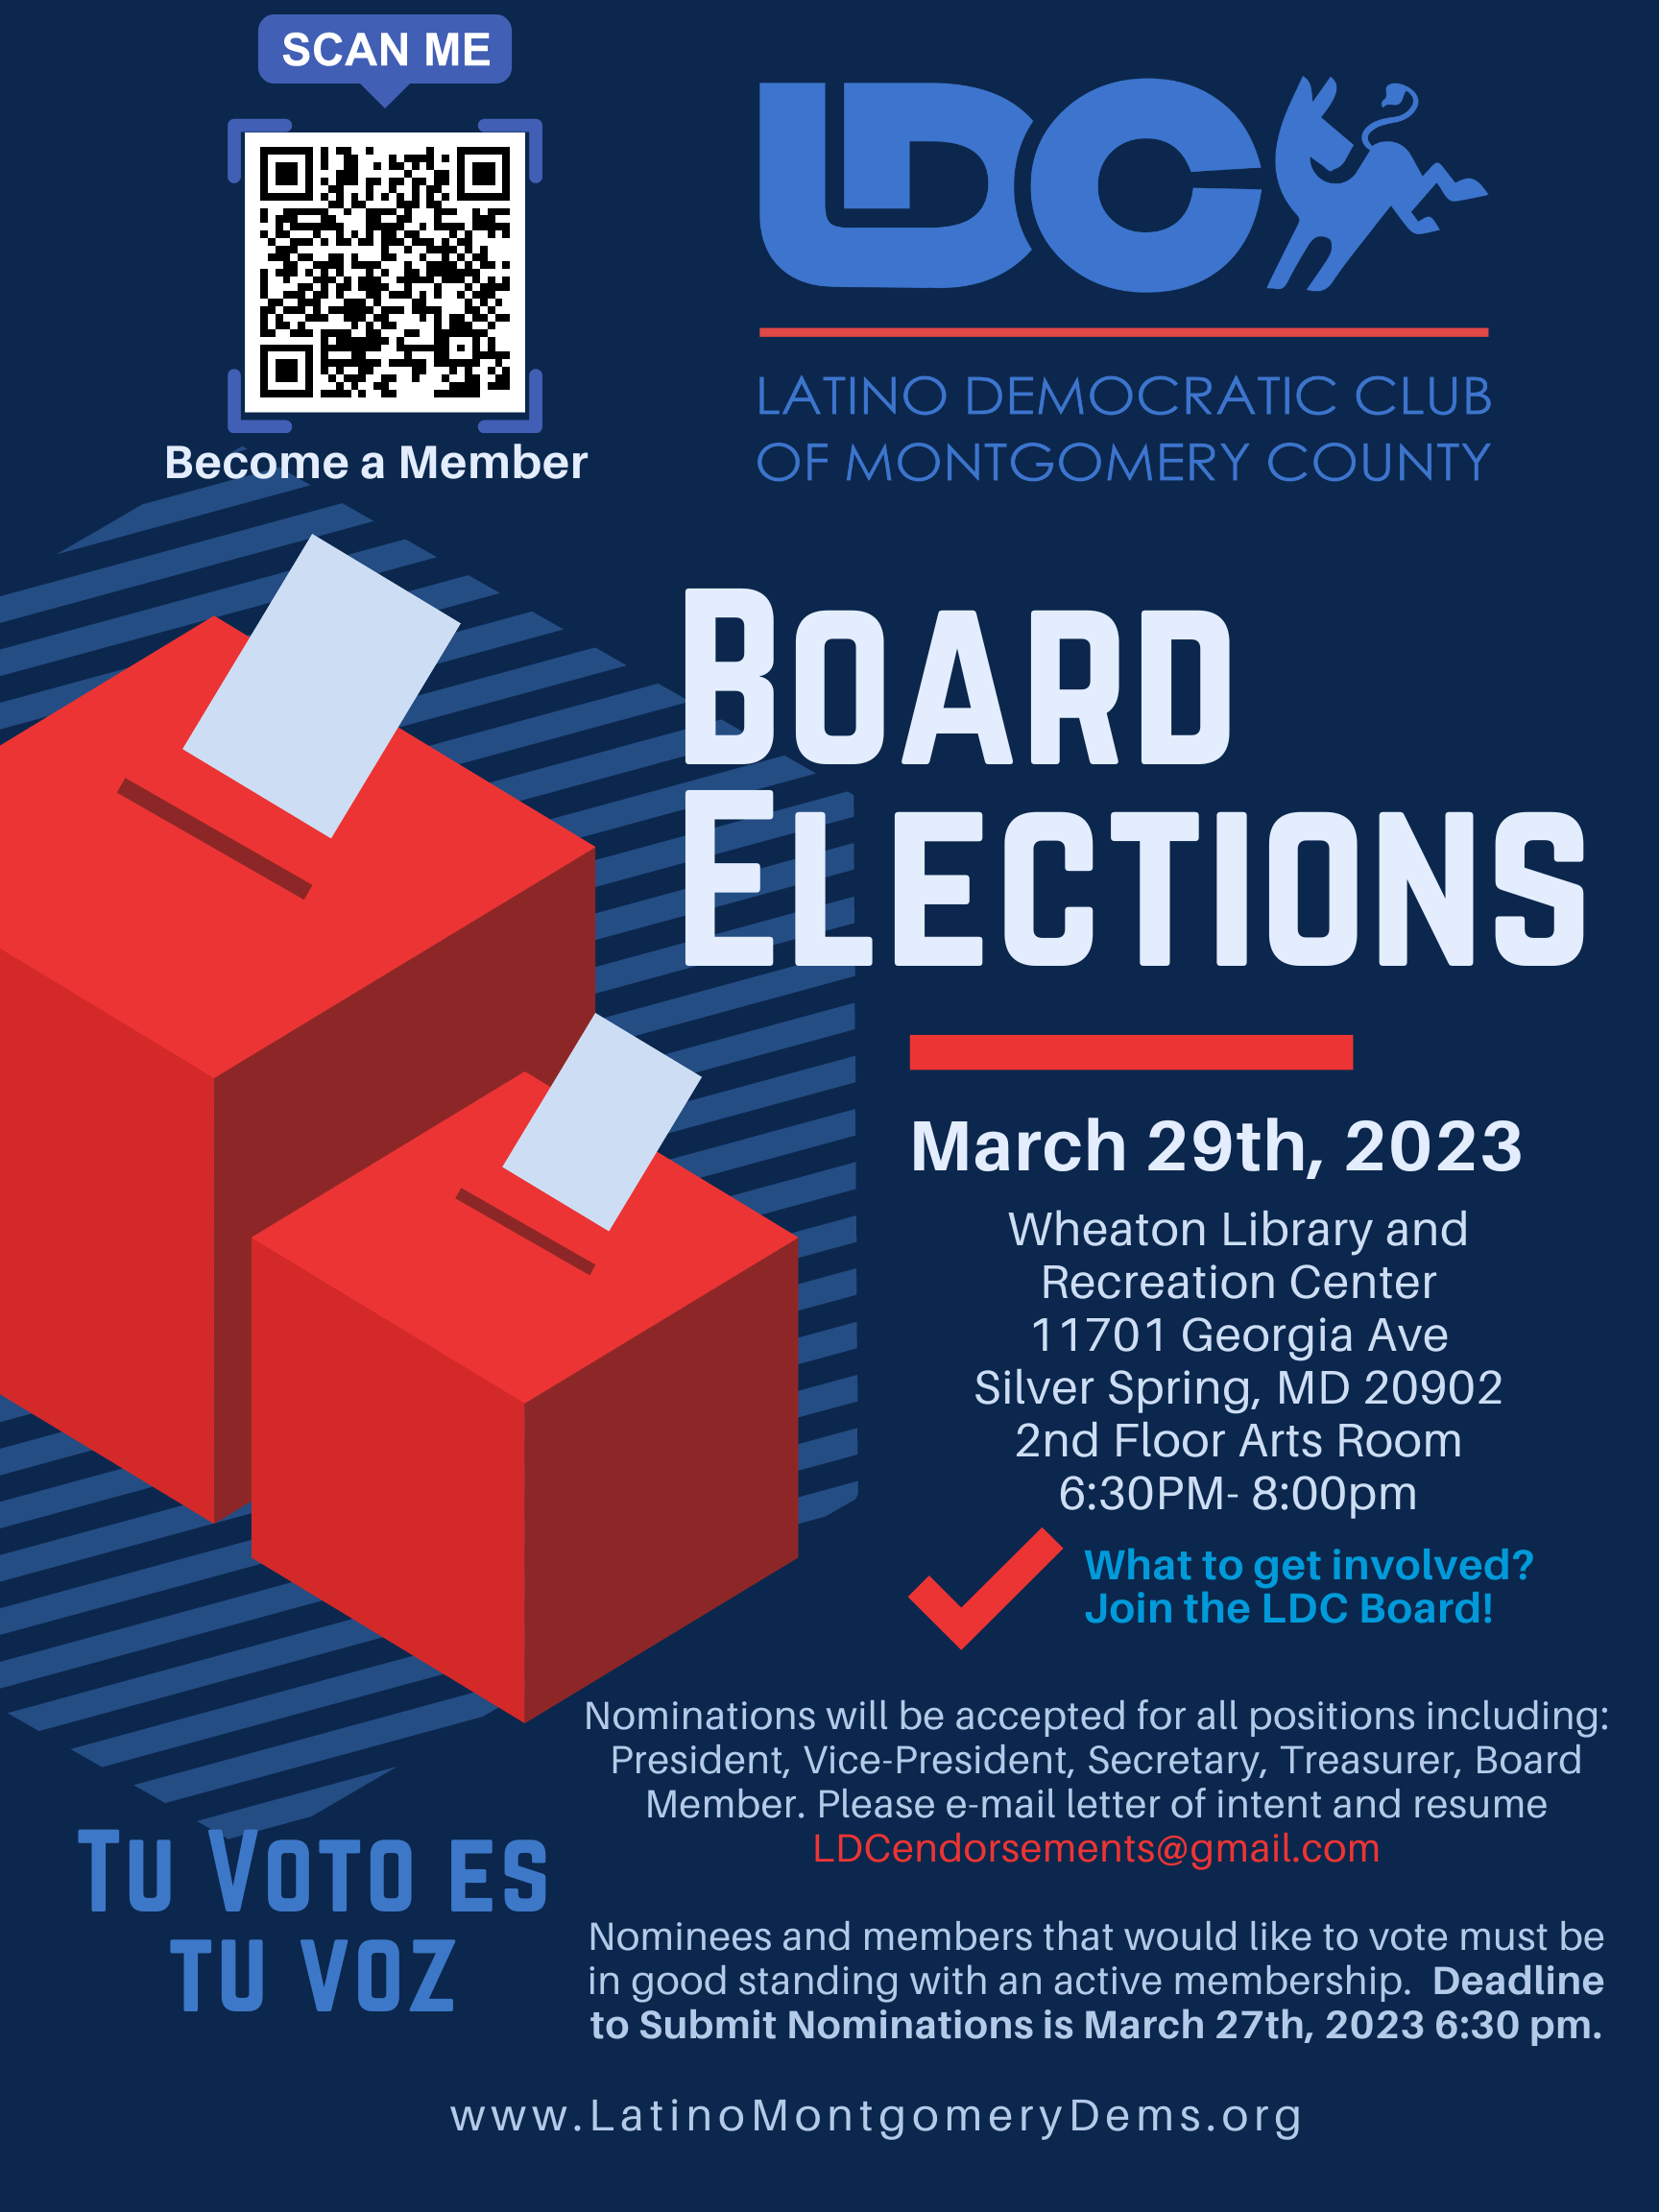 Latino Democratic Club of Montgomery County